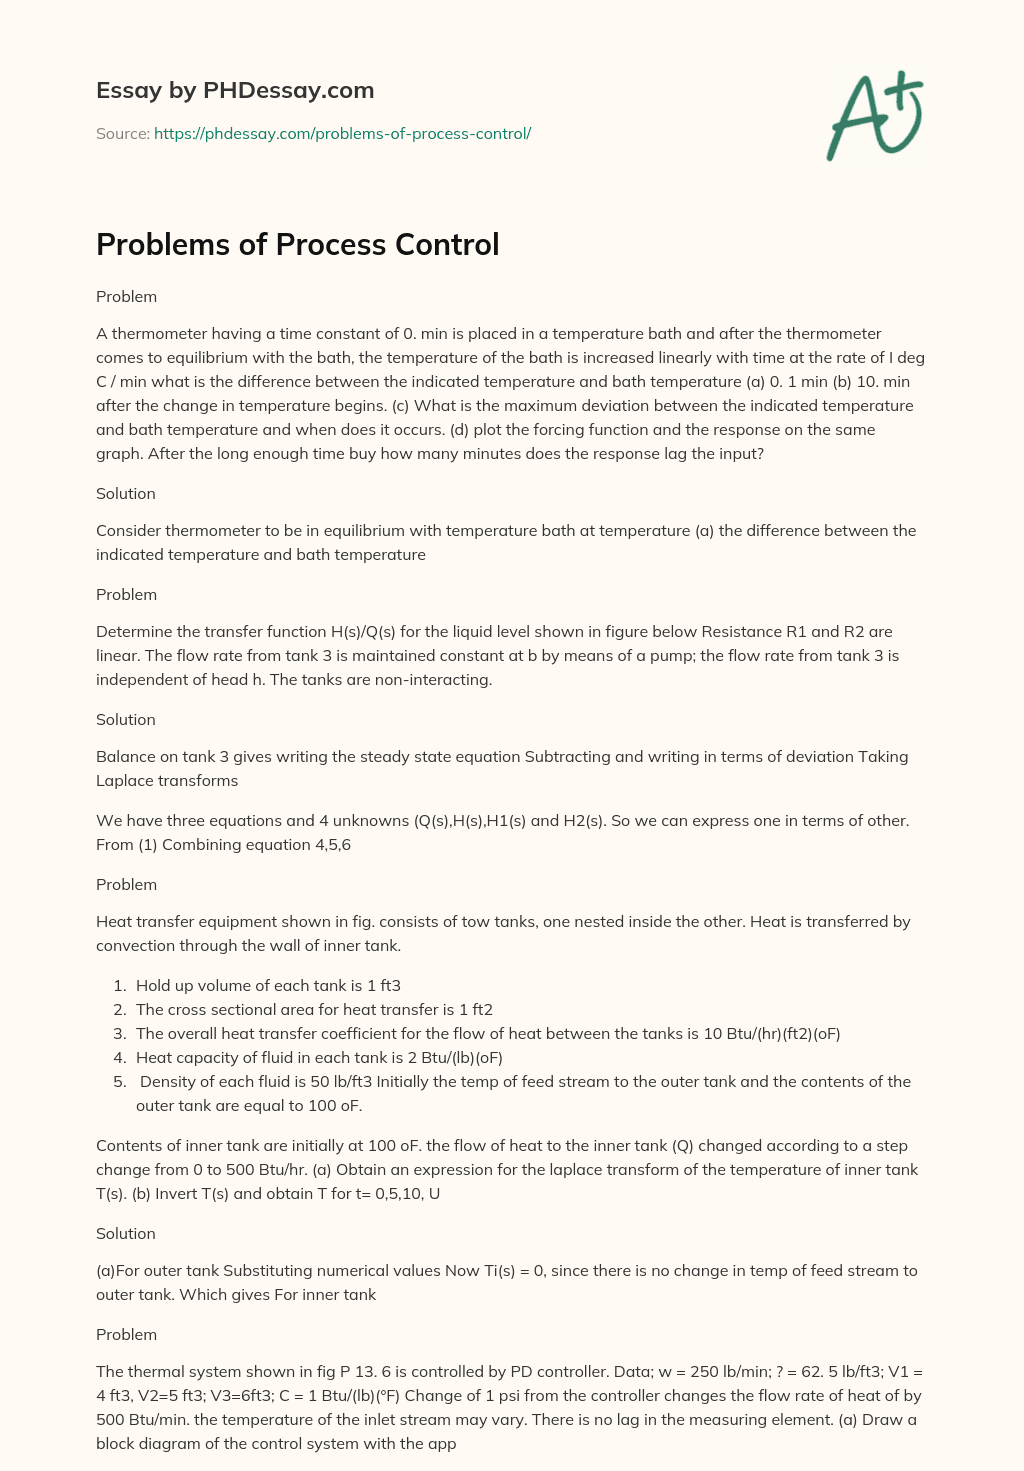 Problems of Process Control essay